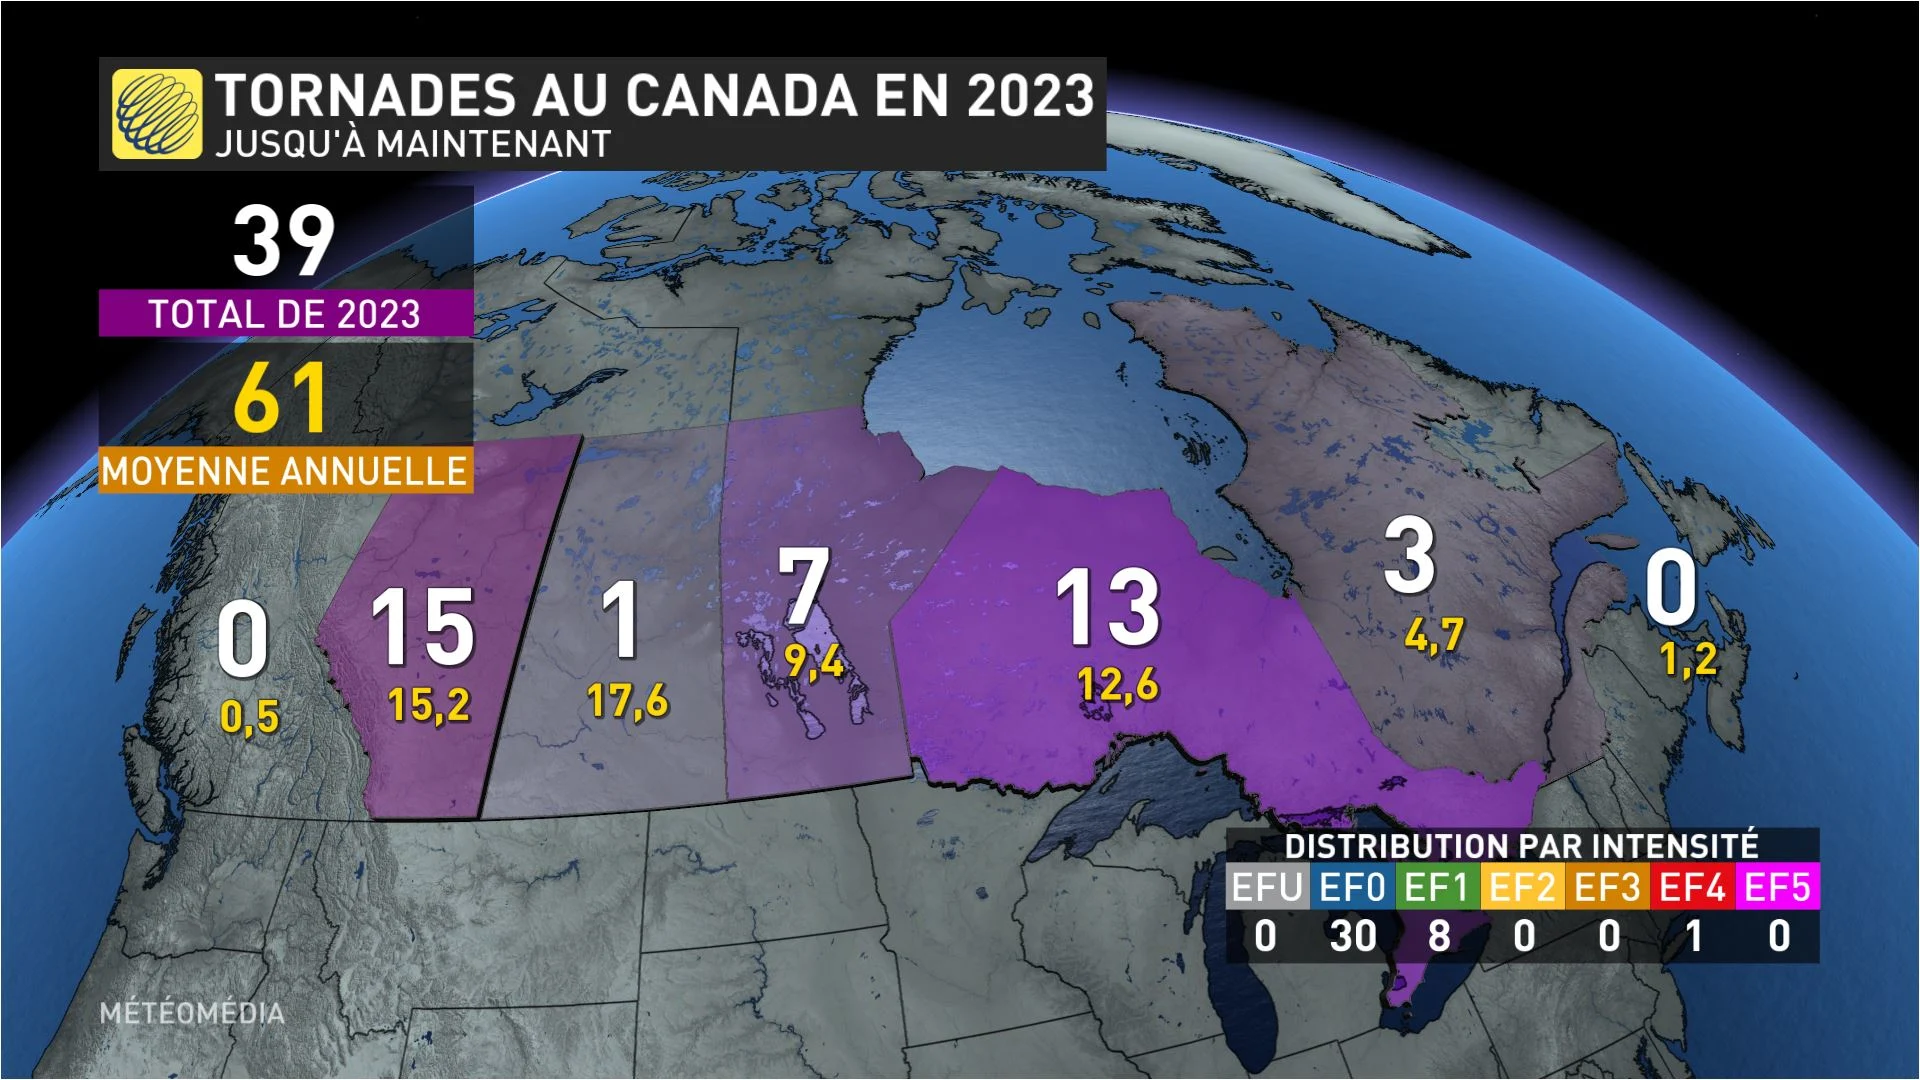 Tornades au Canada en 2023